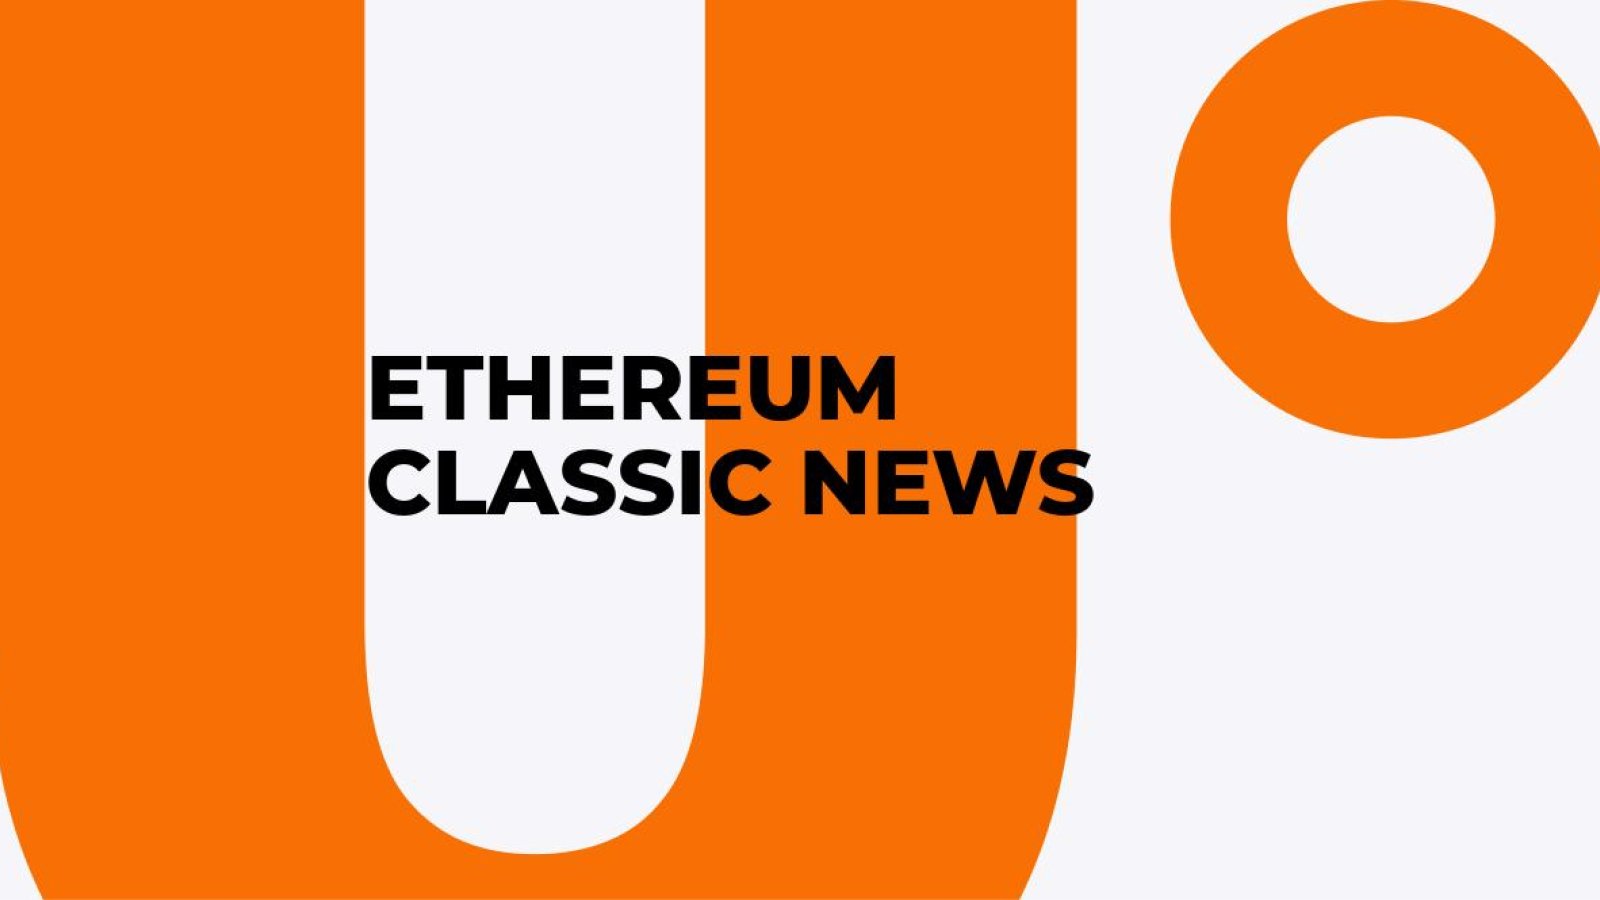 ETC Latest News - Ethereum Classic News Today